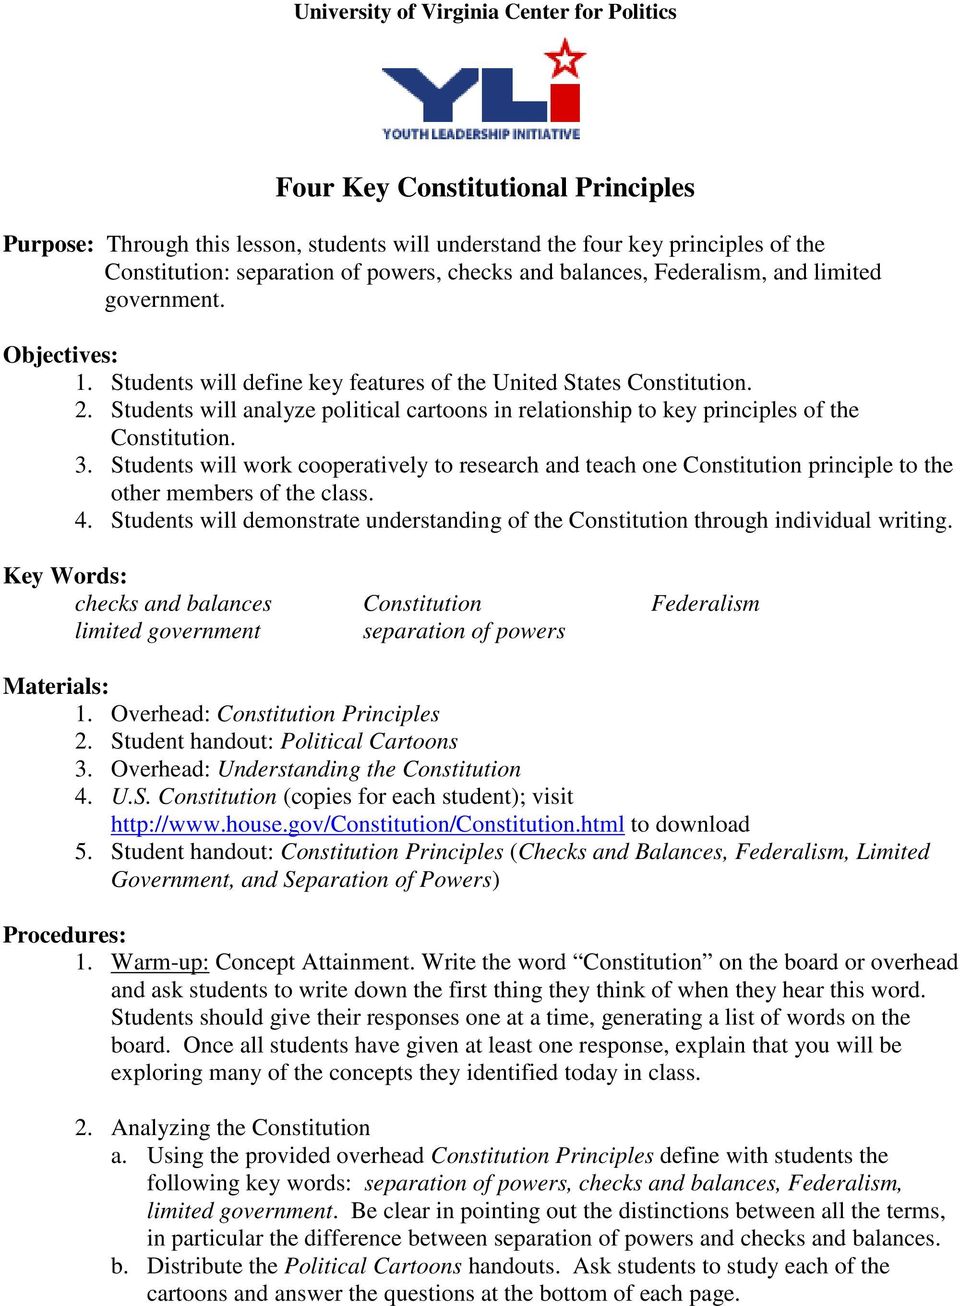 Four Key Constitutional Principles - PDF Free Download With Constitutional Principles Worksheet Answers